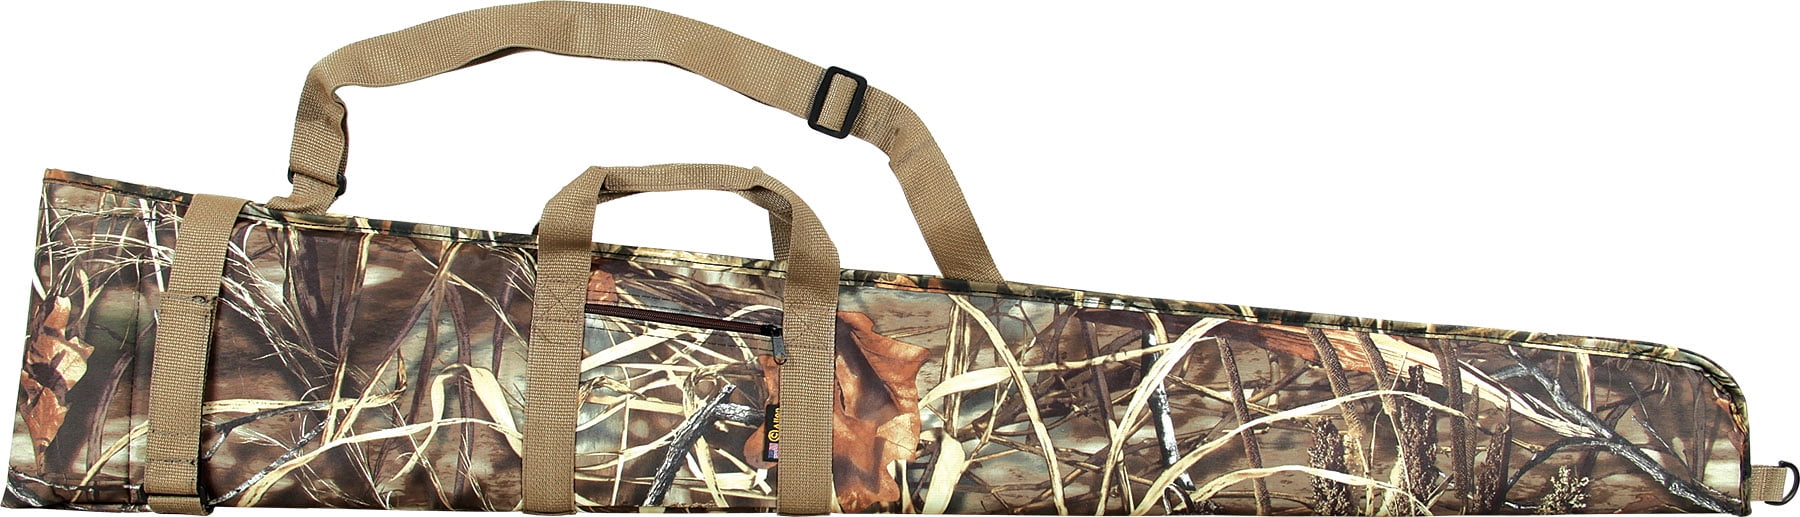 Hunting Padding Gun Slip Bag 52 inch Shotgun Case Canvas and Leather USA LOCAL